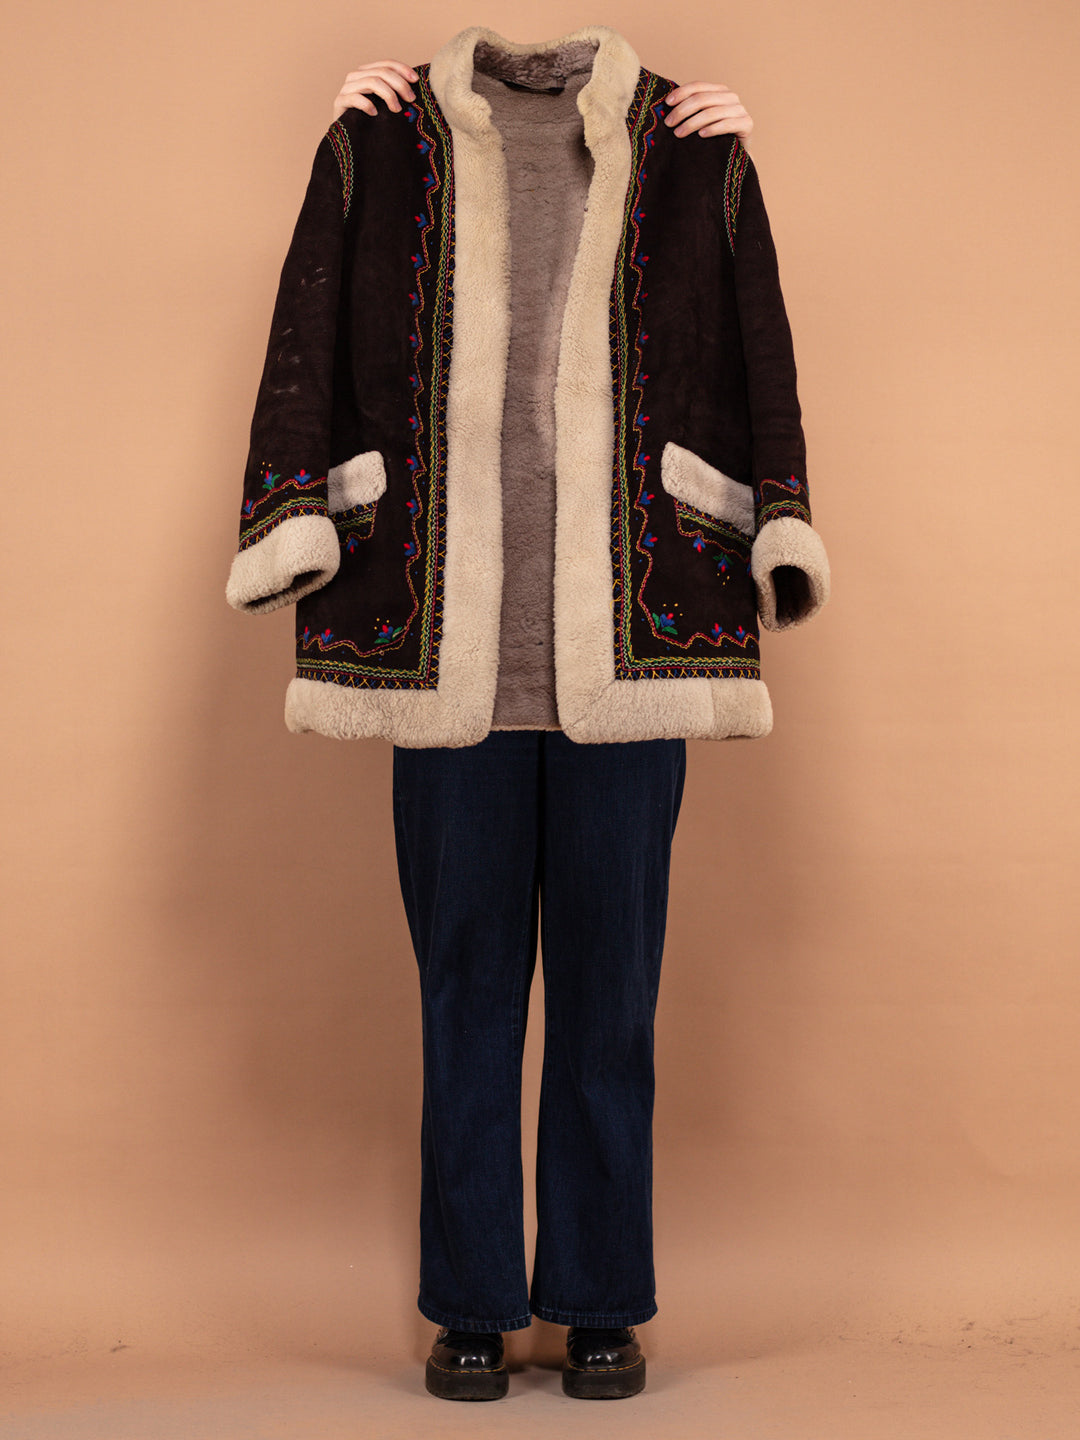 Embroidered Sheepskin Coat 70's, Size L Vintage Authentic Penny Lane Coat, Women Brown Shearling Coat, Fur Trim Winter Coat, Hippie Coat